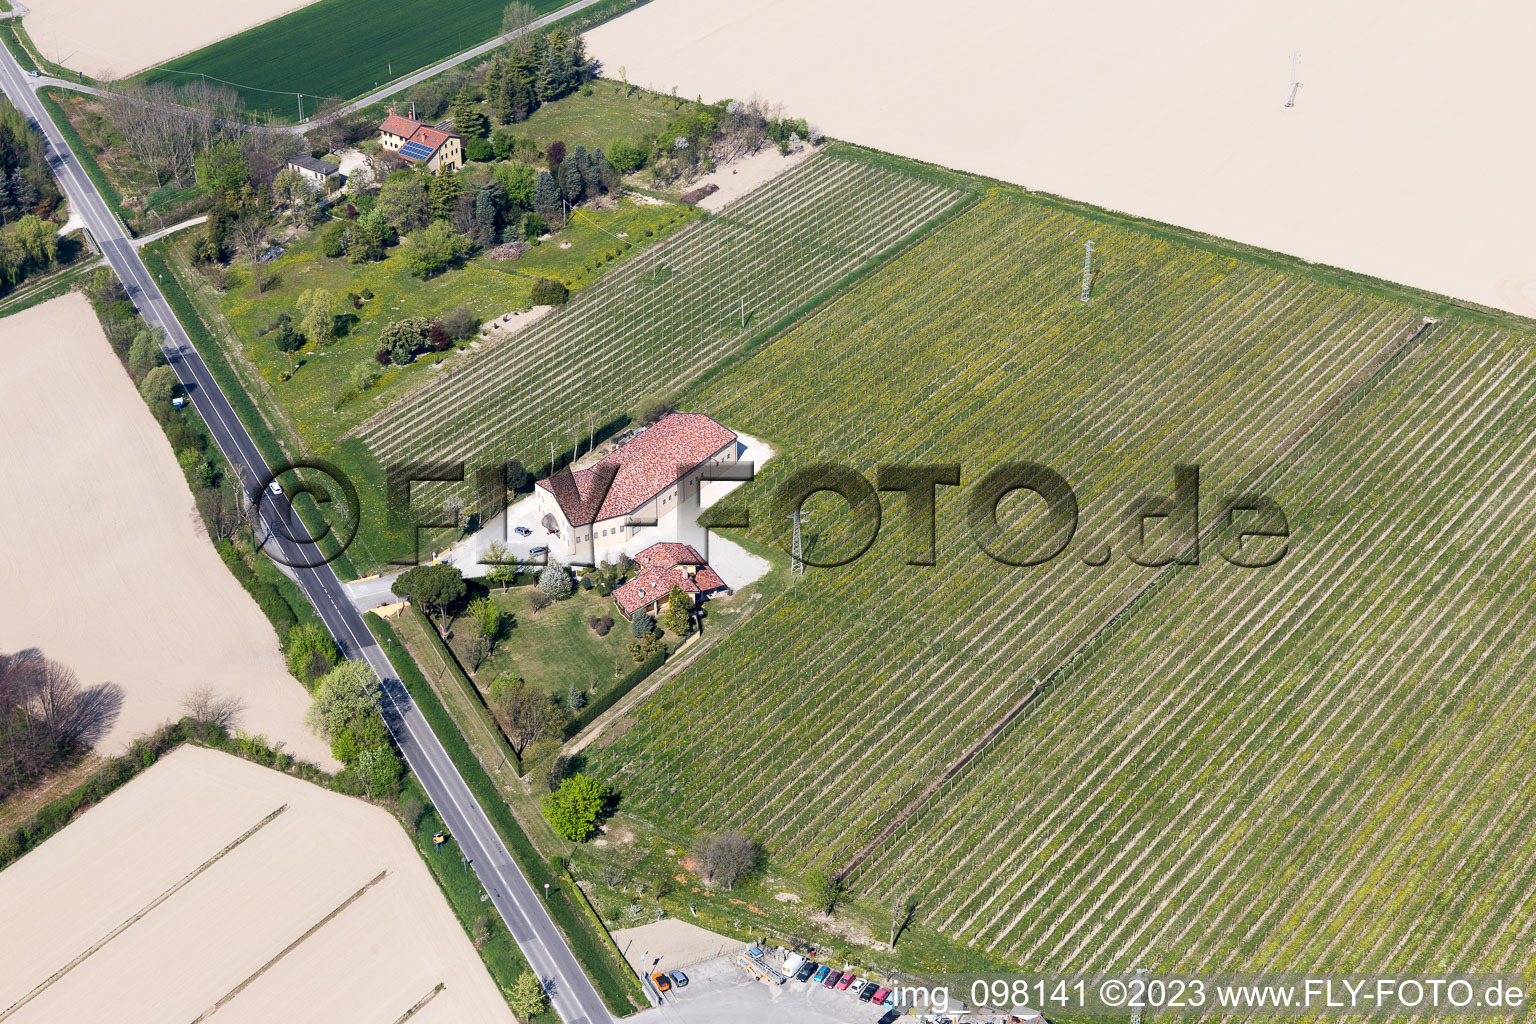 Aerial view of Cavarzerani in the state Veneto, Italy